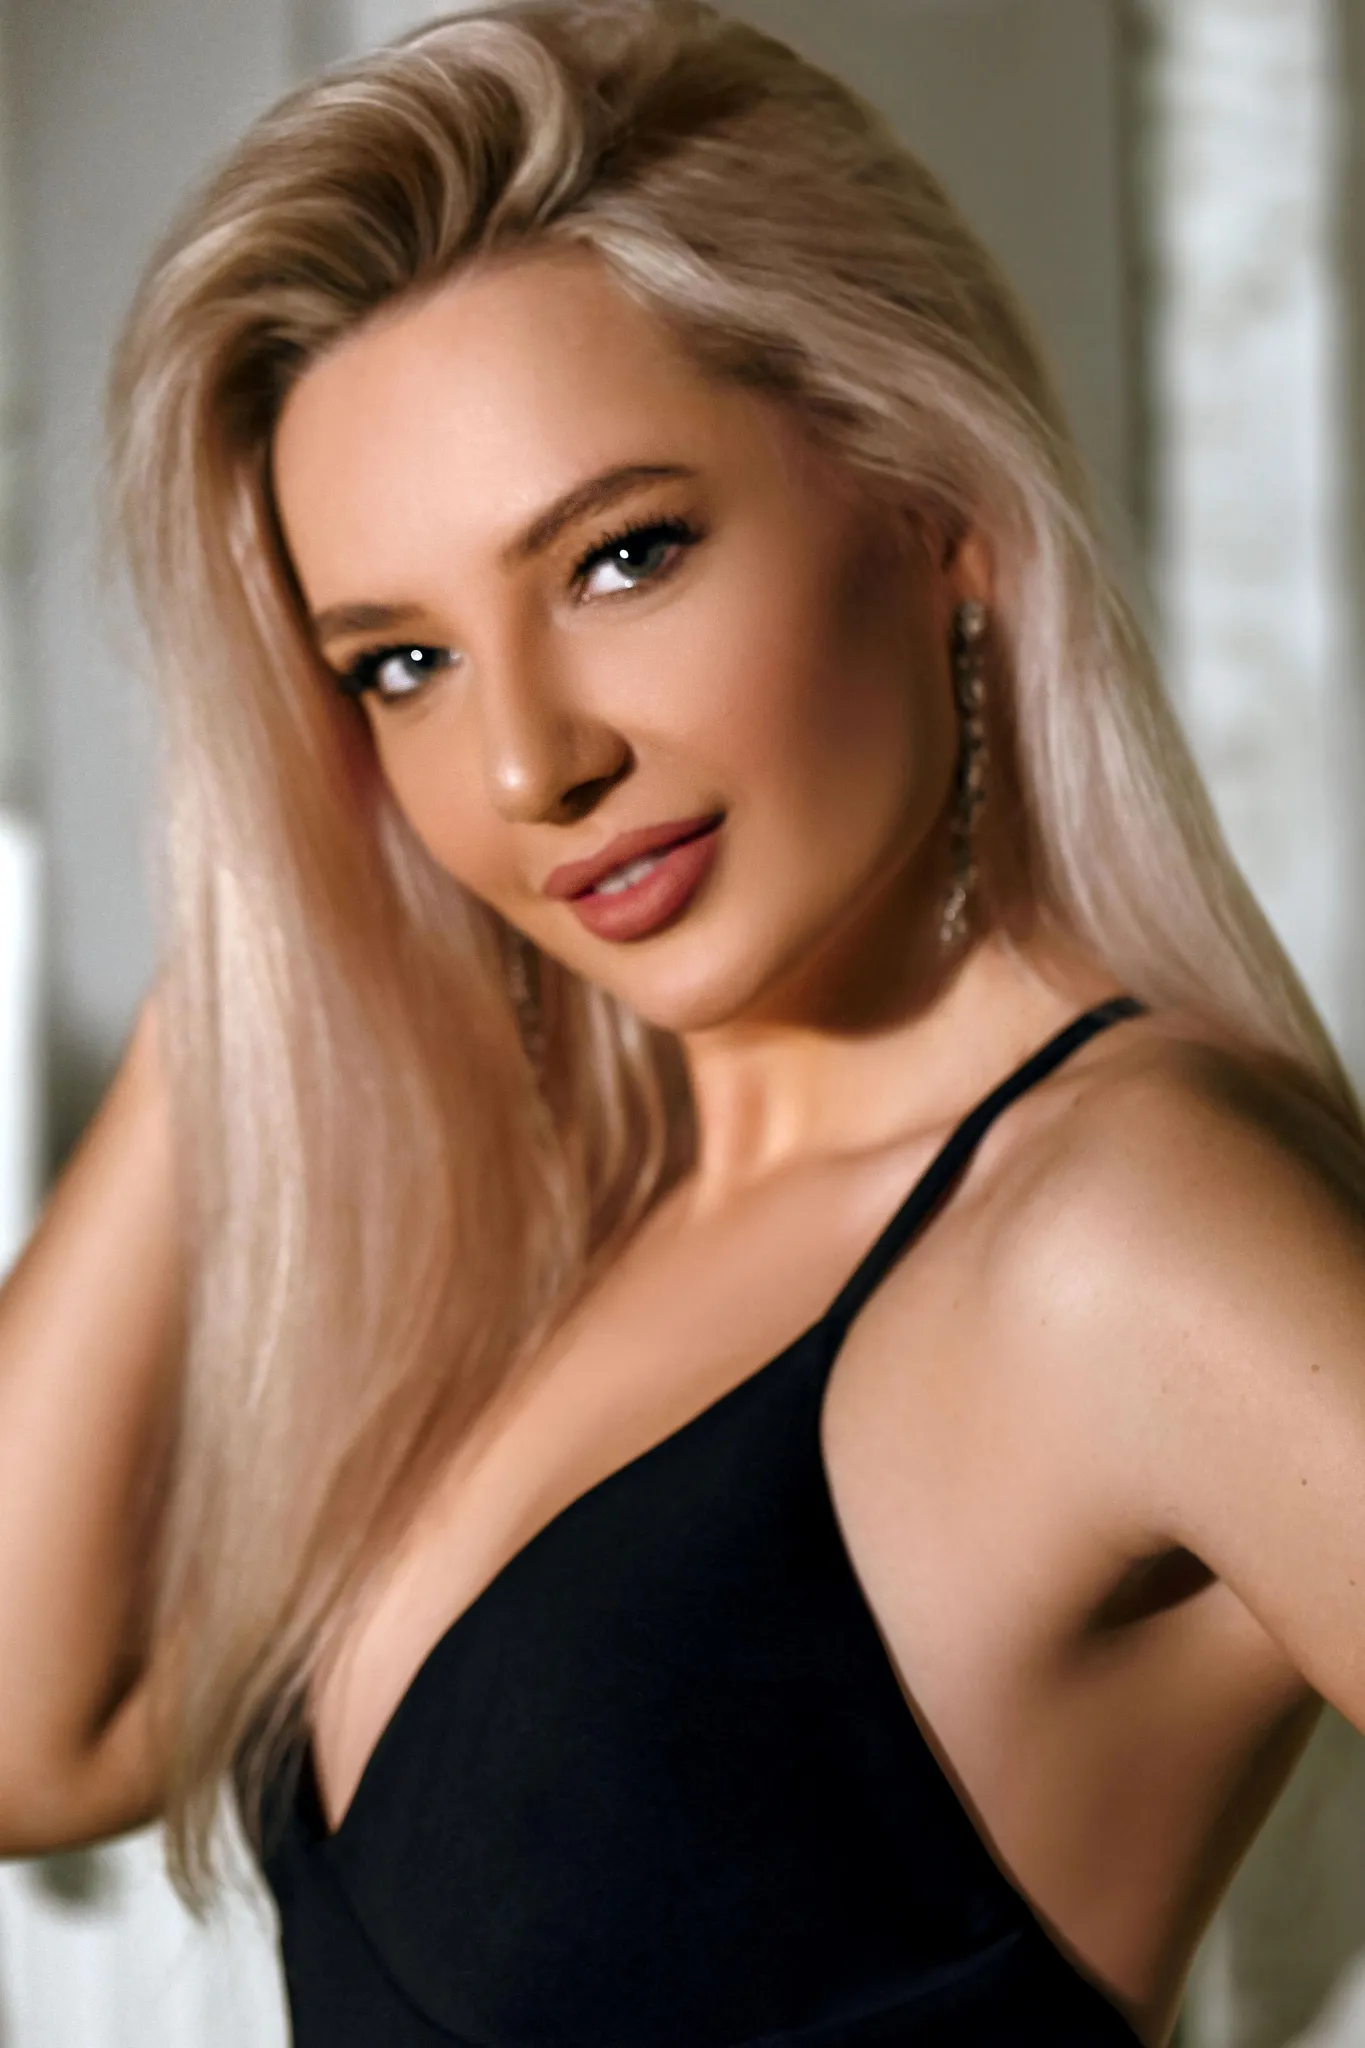 Anna russian ukrainian dating sites